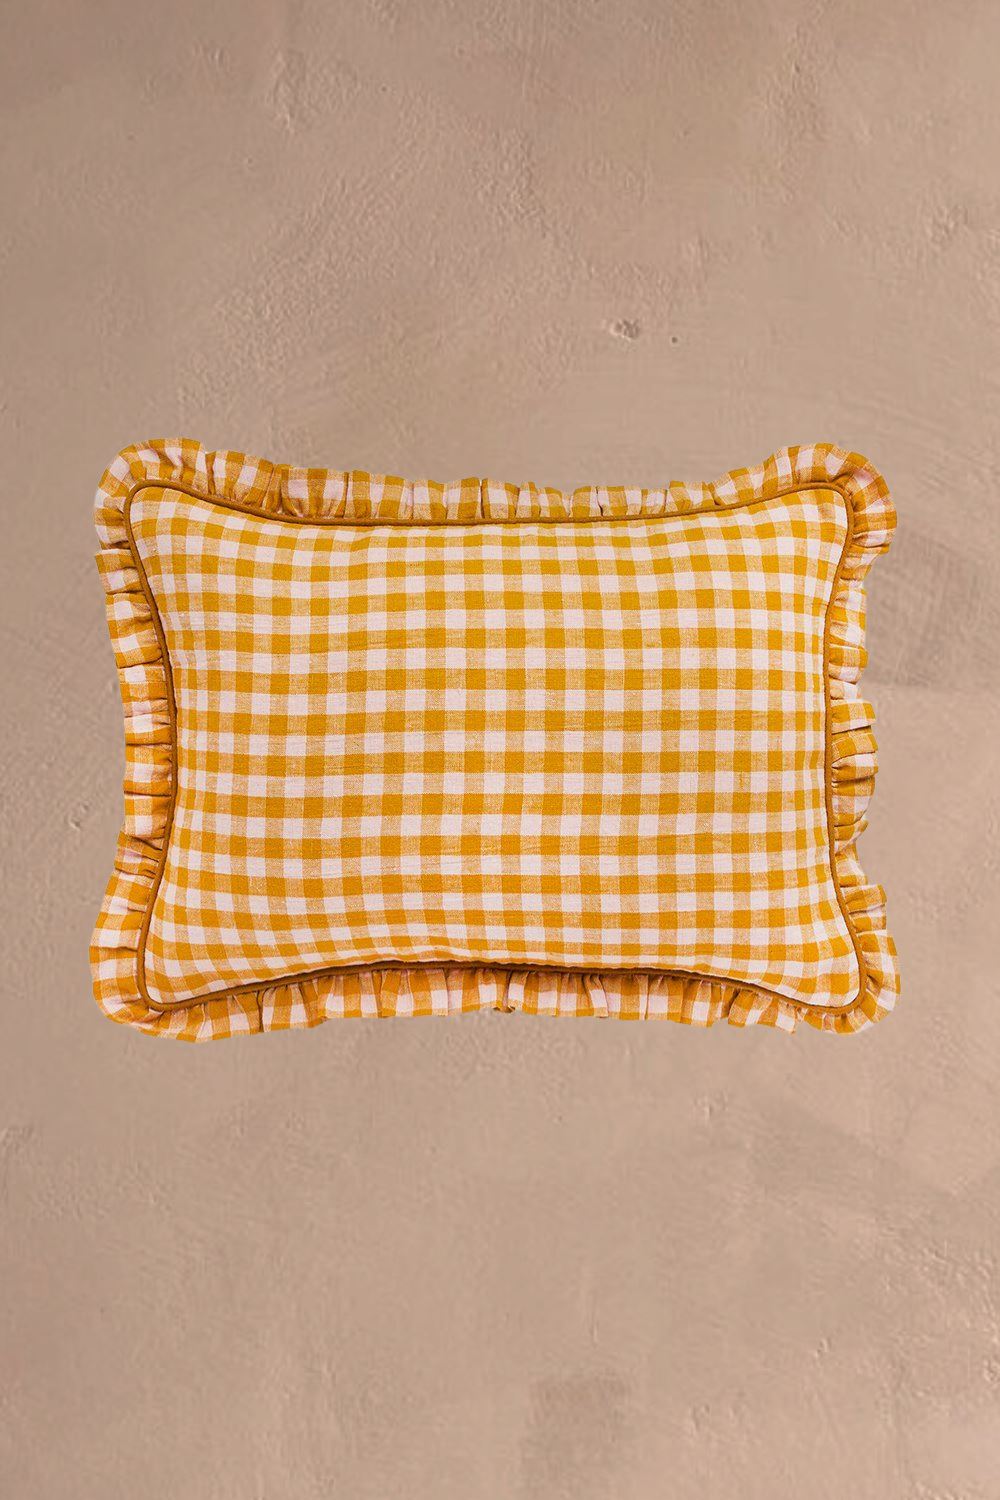 Gingham Frill Cushion Soft Furnishings Projekti Tynny 